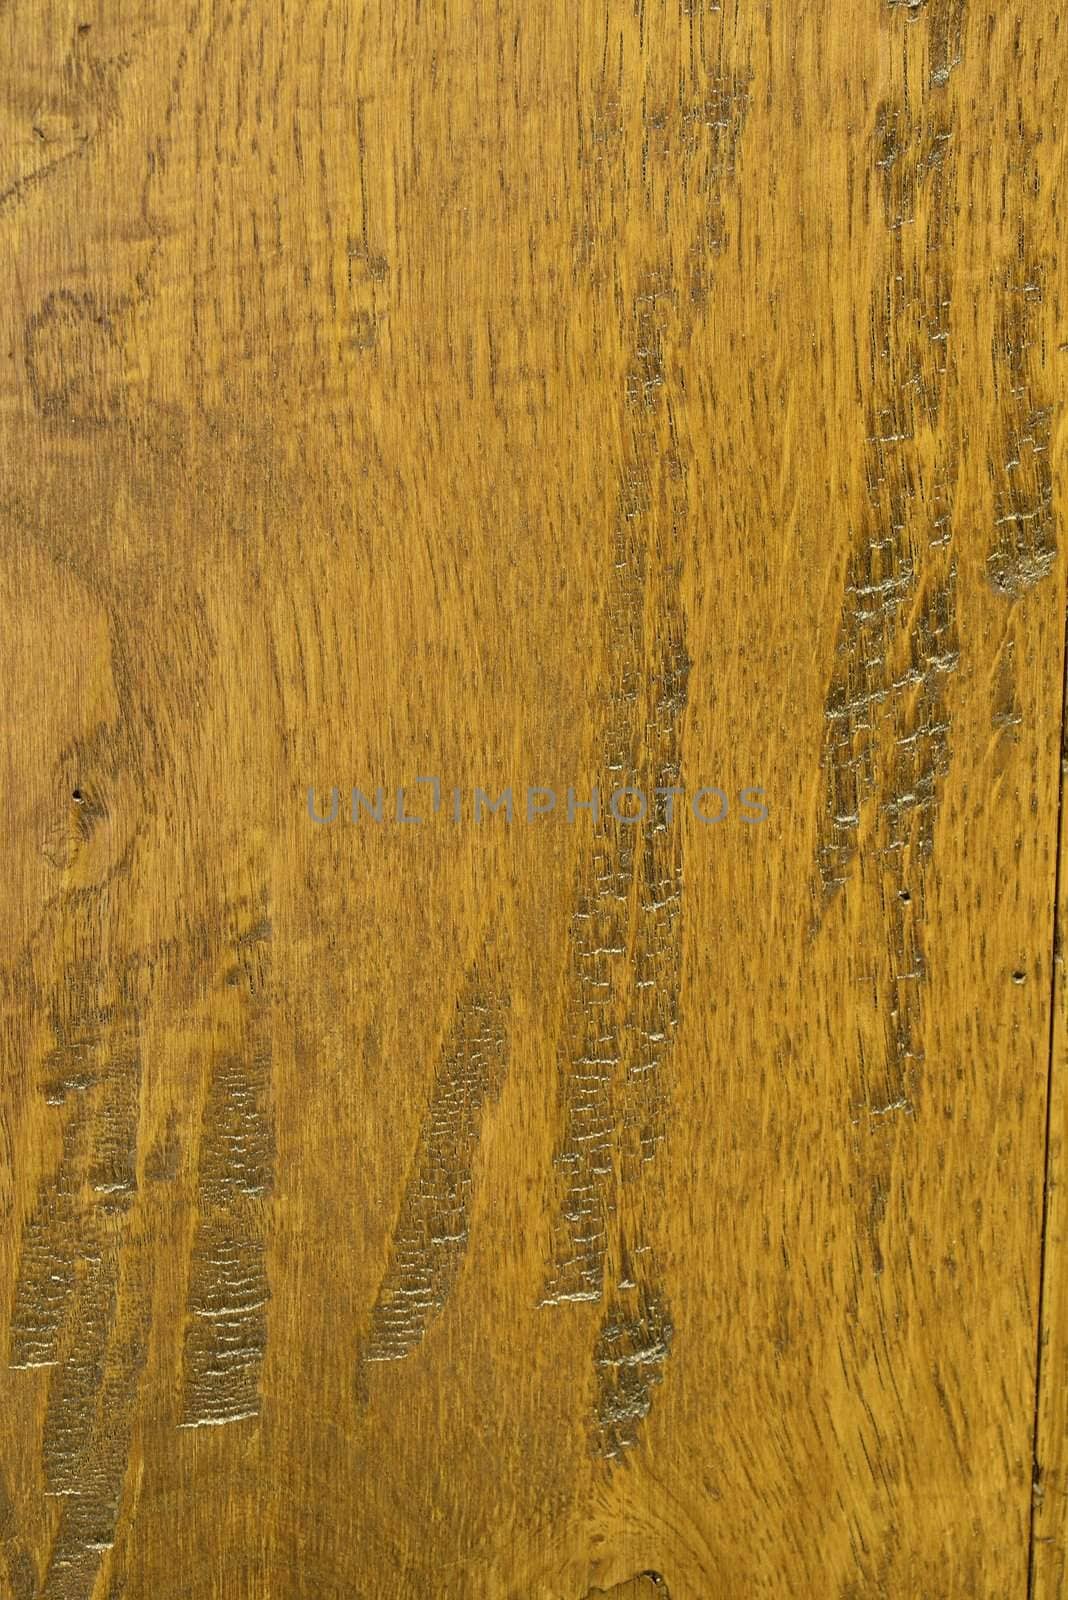 Wood Texture  by mizio1970